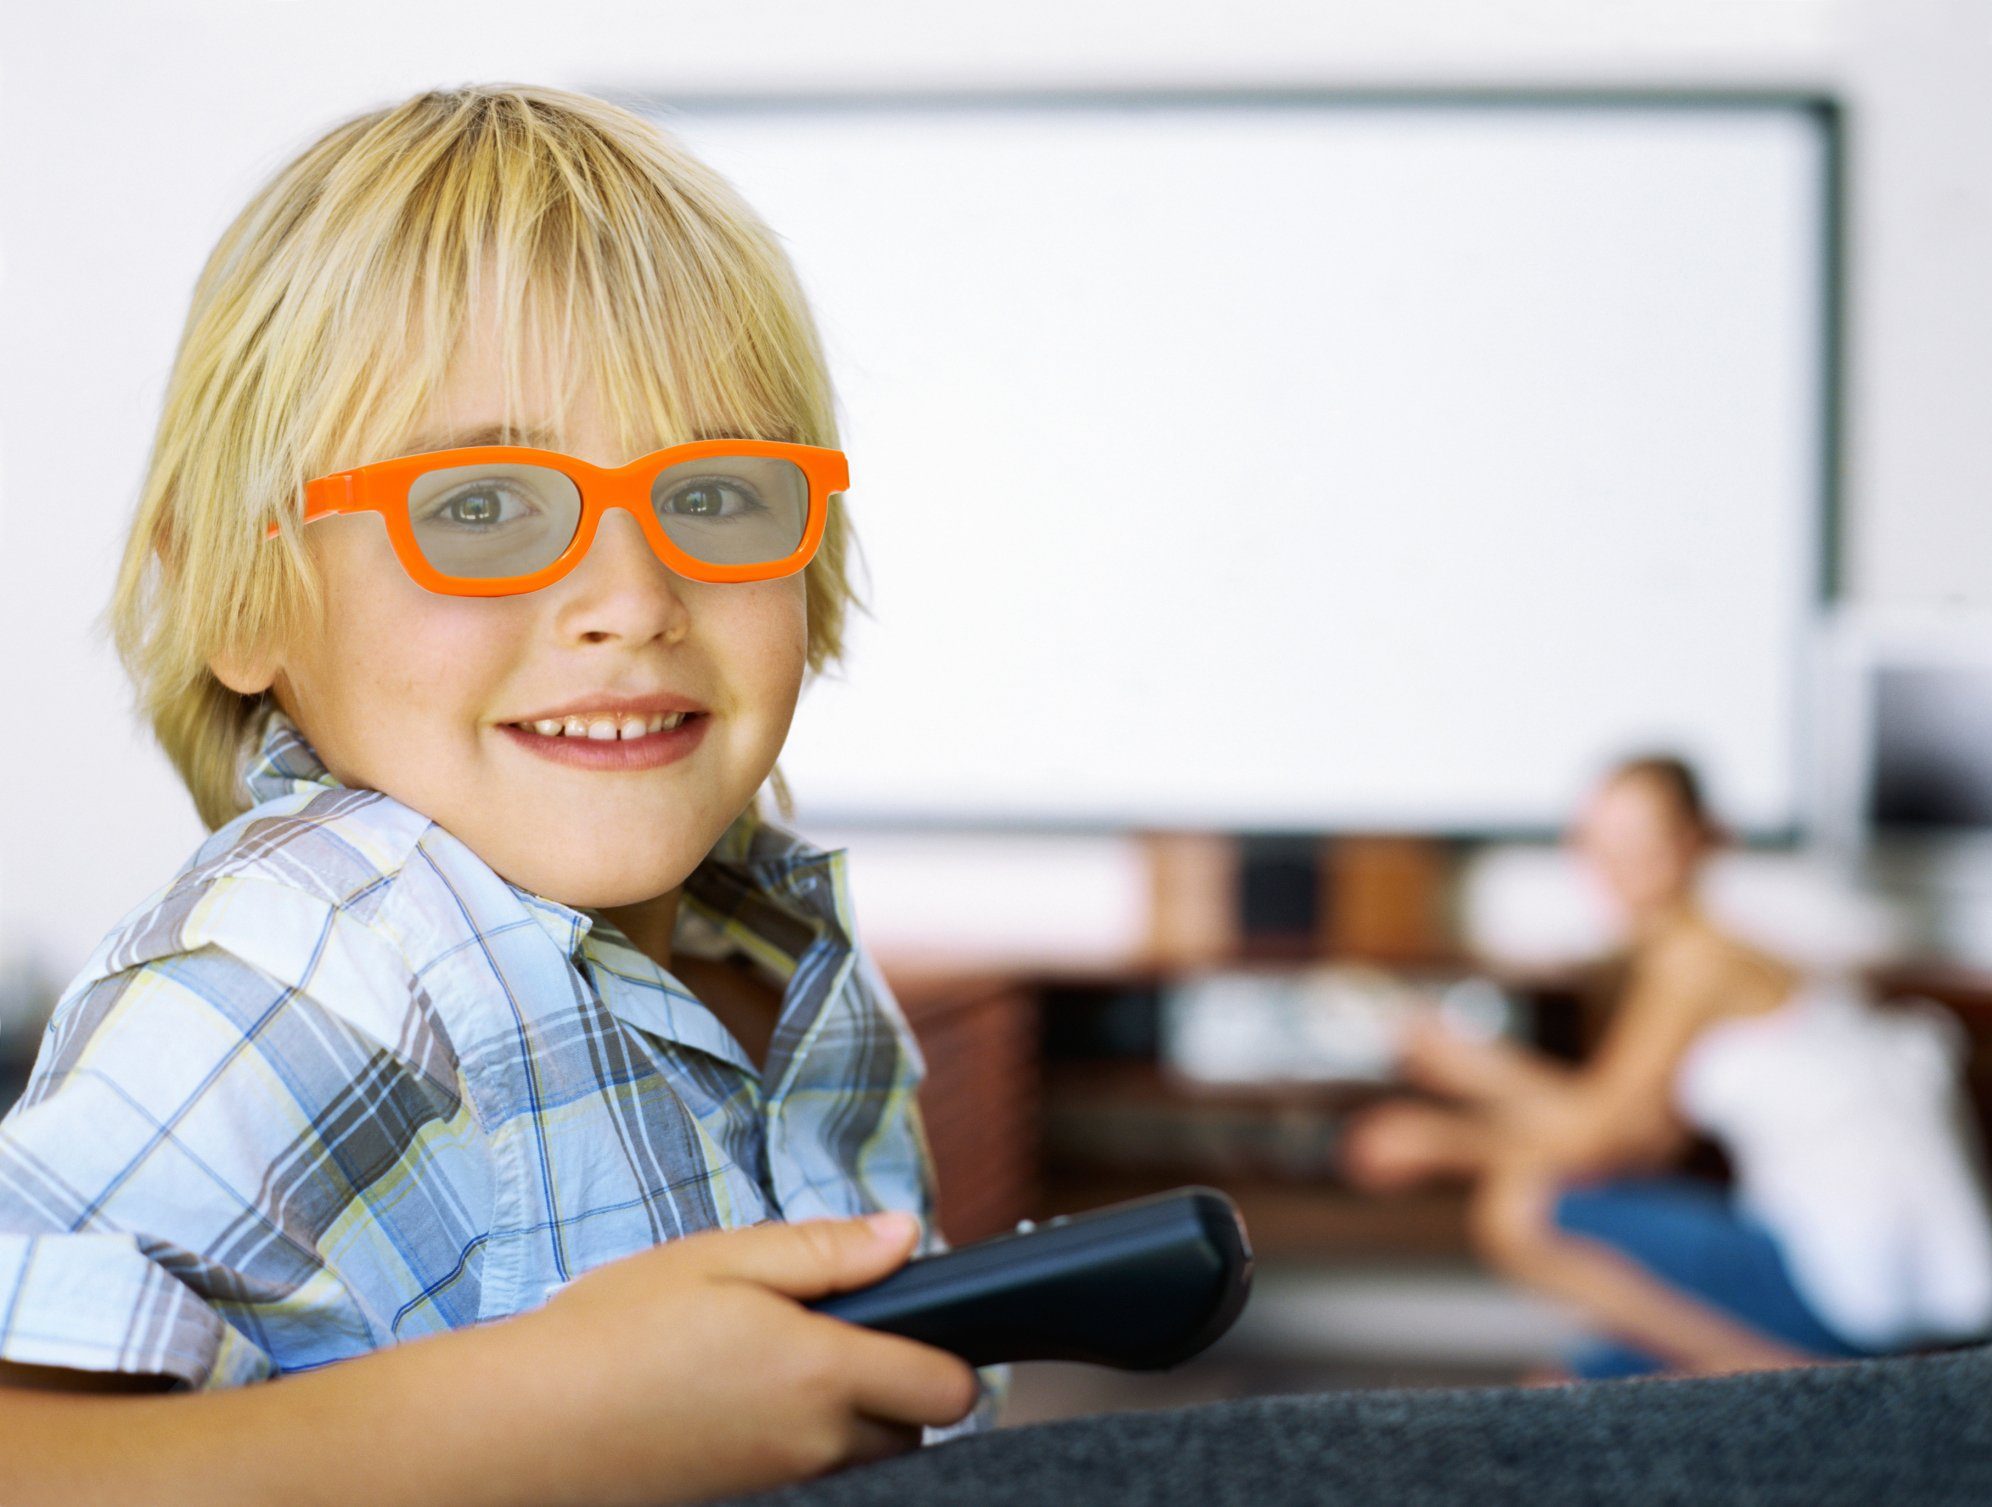 Passive Universale 3D Kinder-Brille orange Cinema 3D 3D-Brille PRECORN für